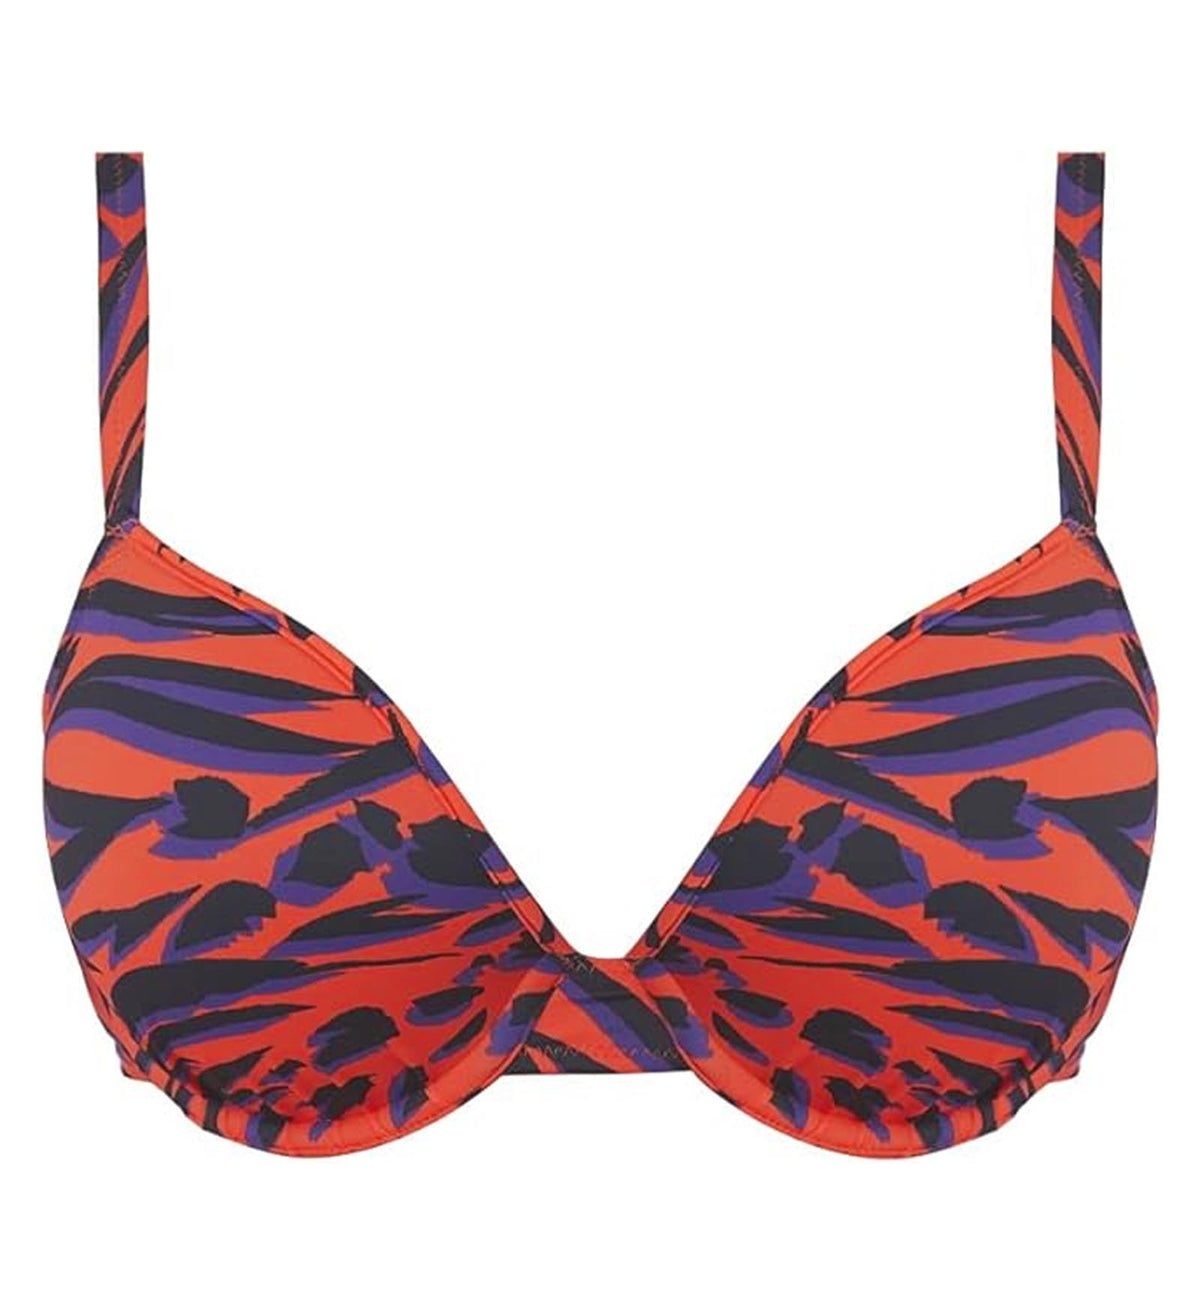 Freya Tiger Bay Underwire Moulded Deco Bikini Top (200715),28F,Sunset - Sunset,28F